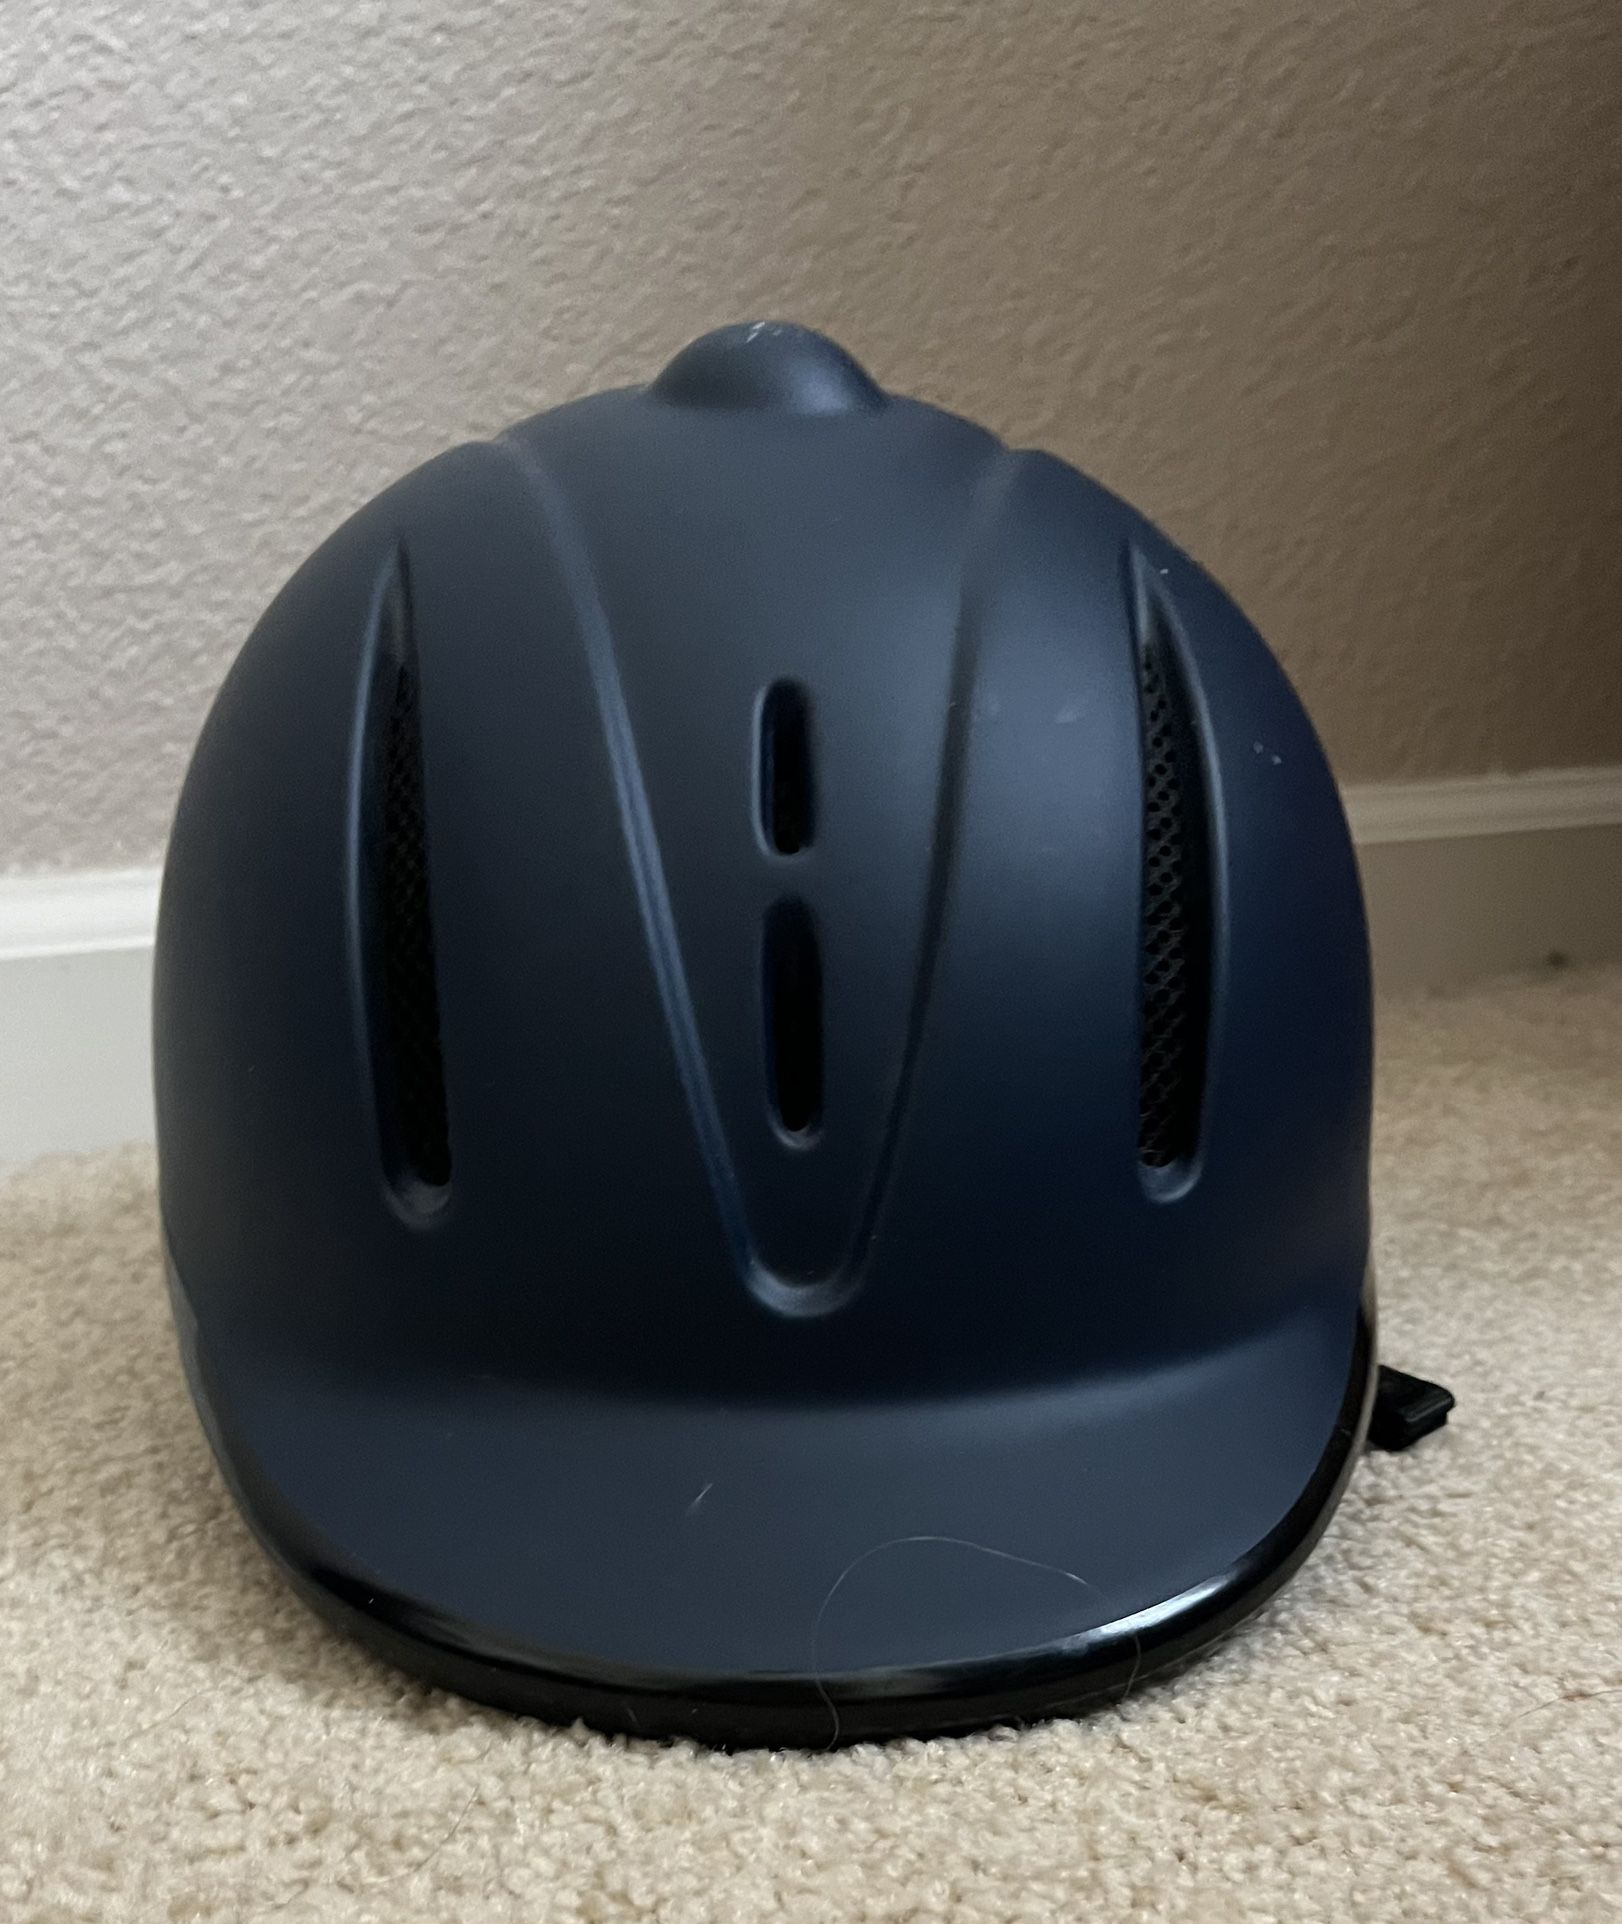 Devon Aire Riding Helmet  